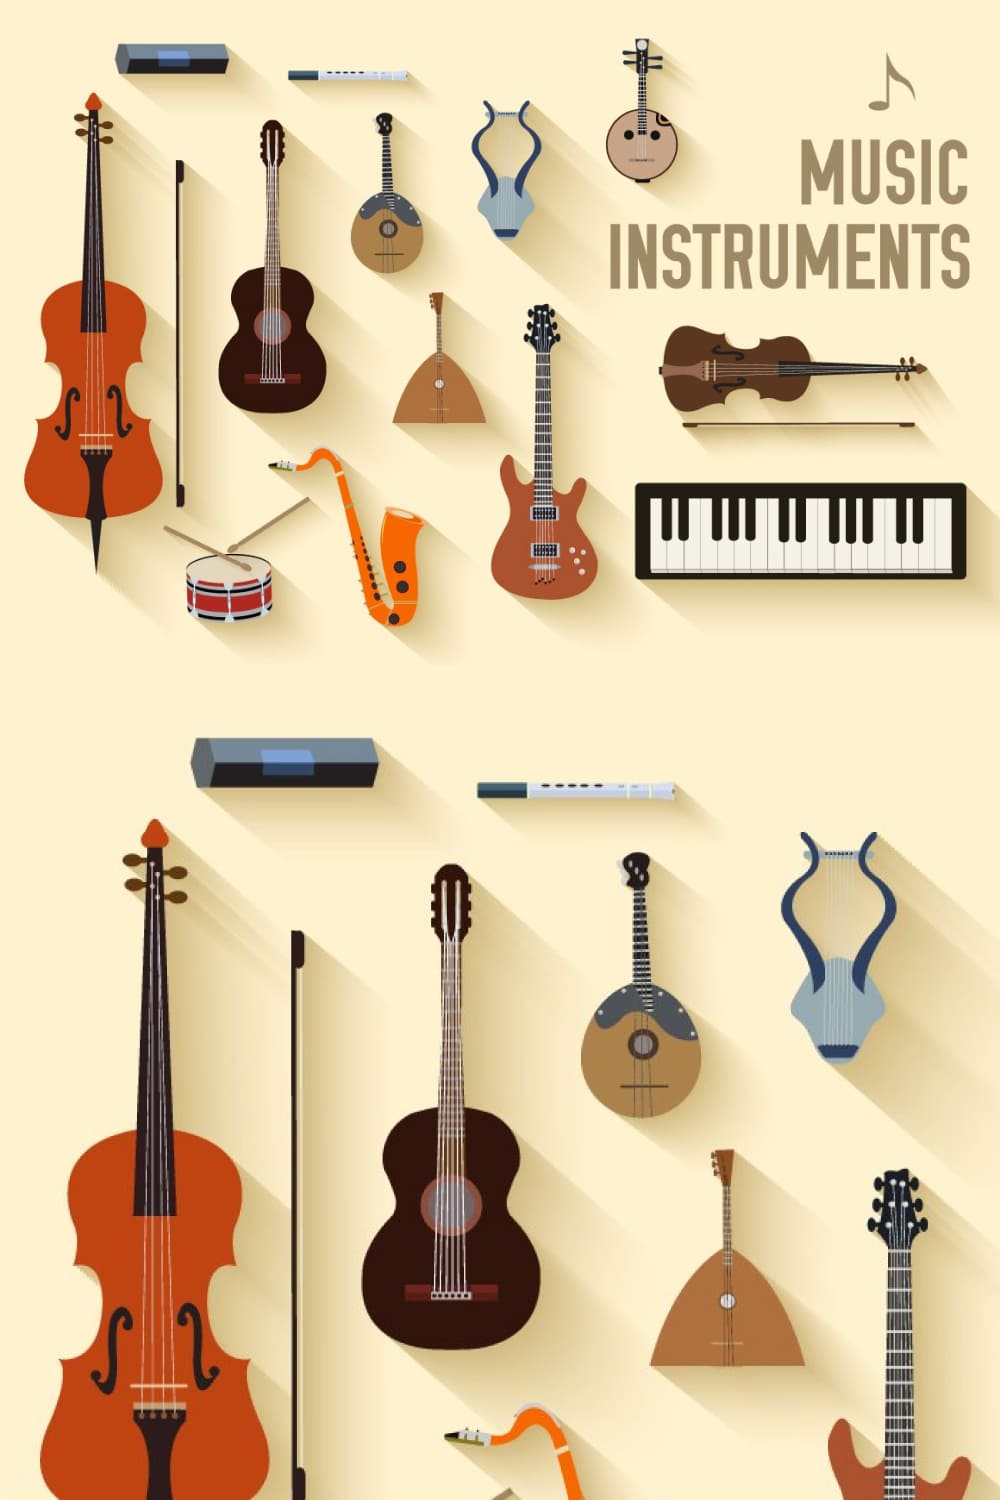 Images of violin, guitar, balalaika, synthesizer, etc.